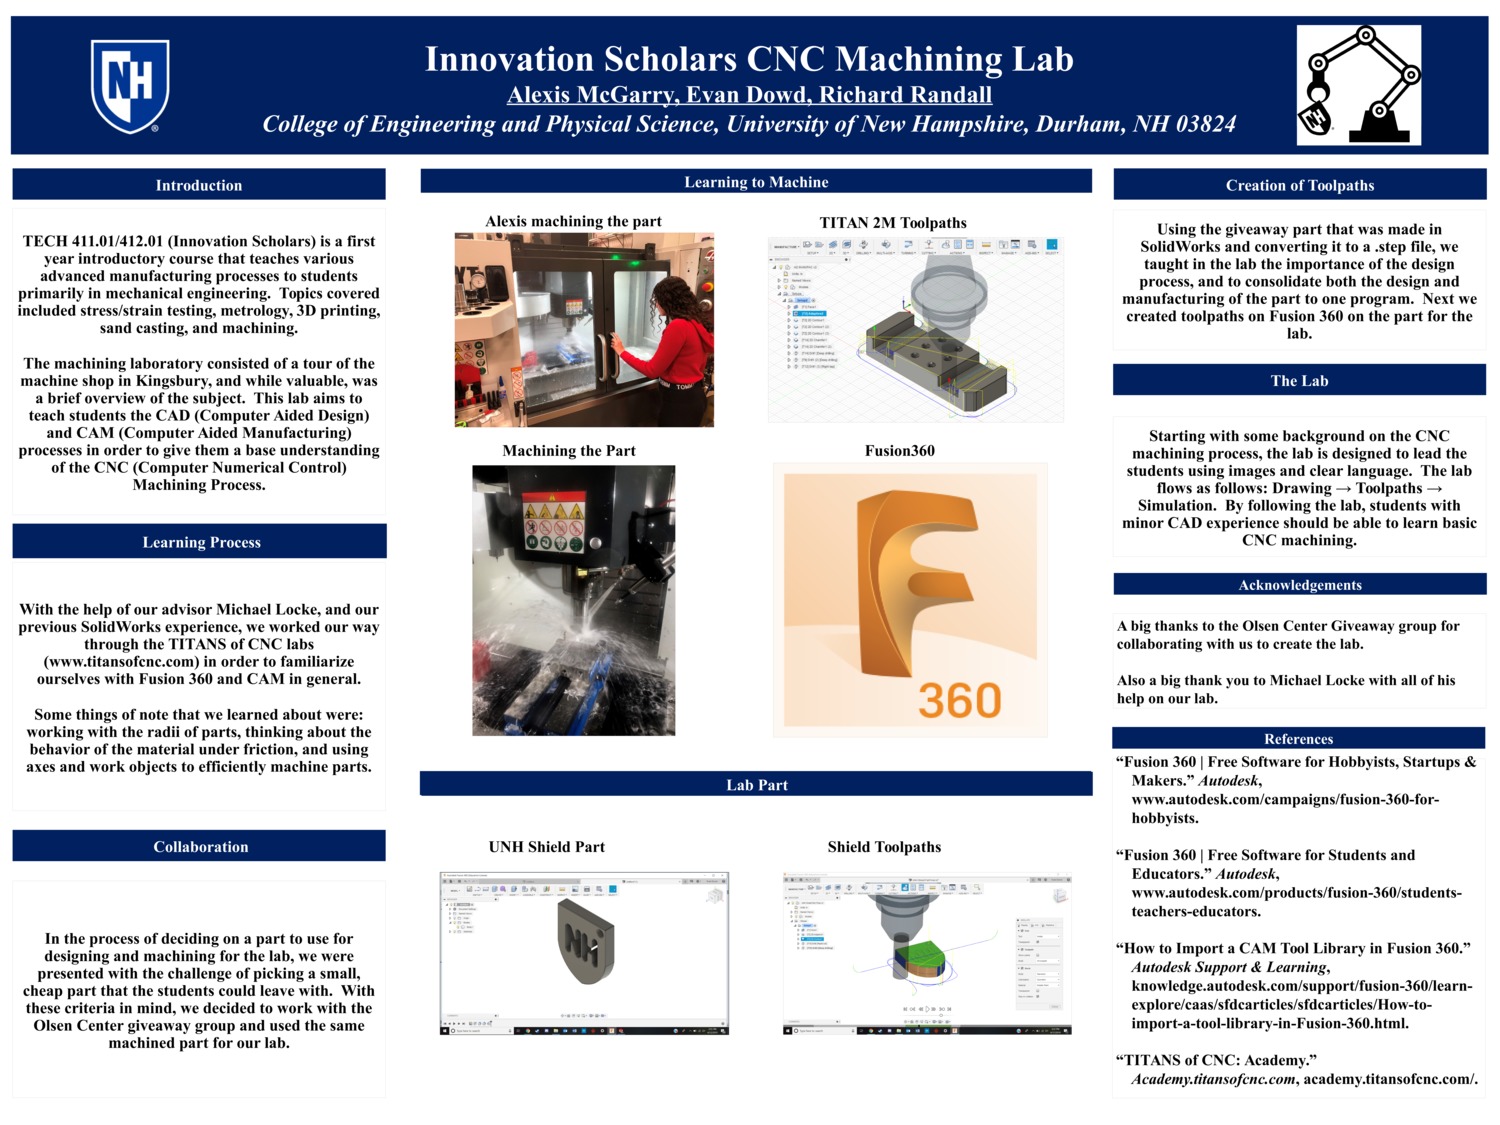 Innovation Scholars Cnc Lab by rdr1009